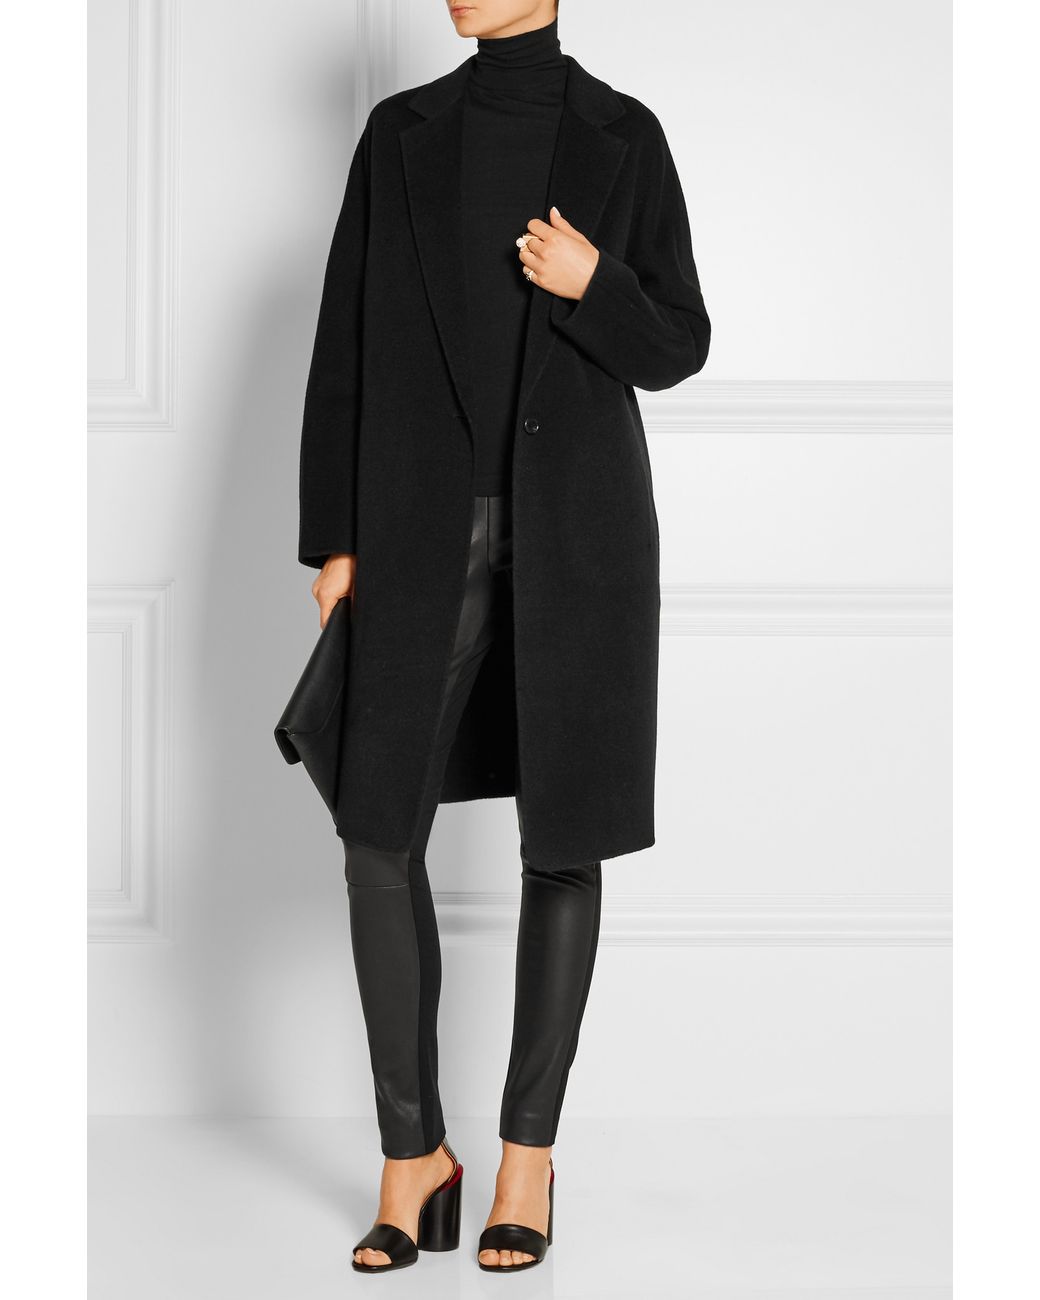 Donna Karan Cashmere Coat in Black | Lyst